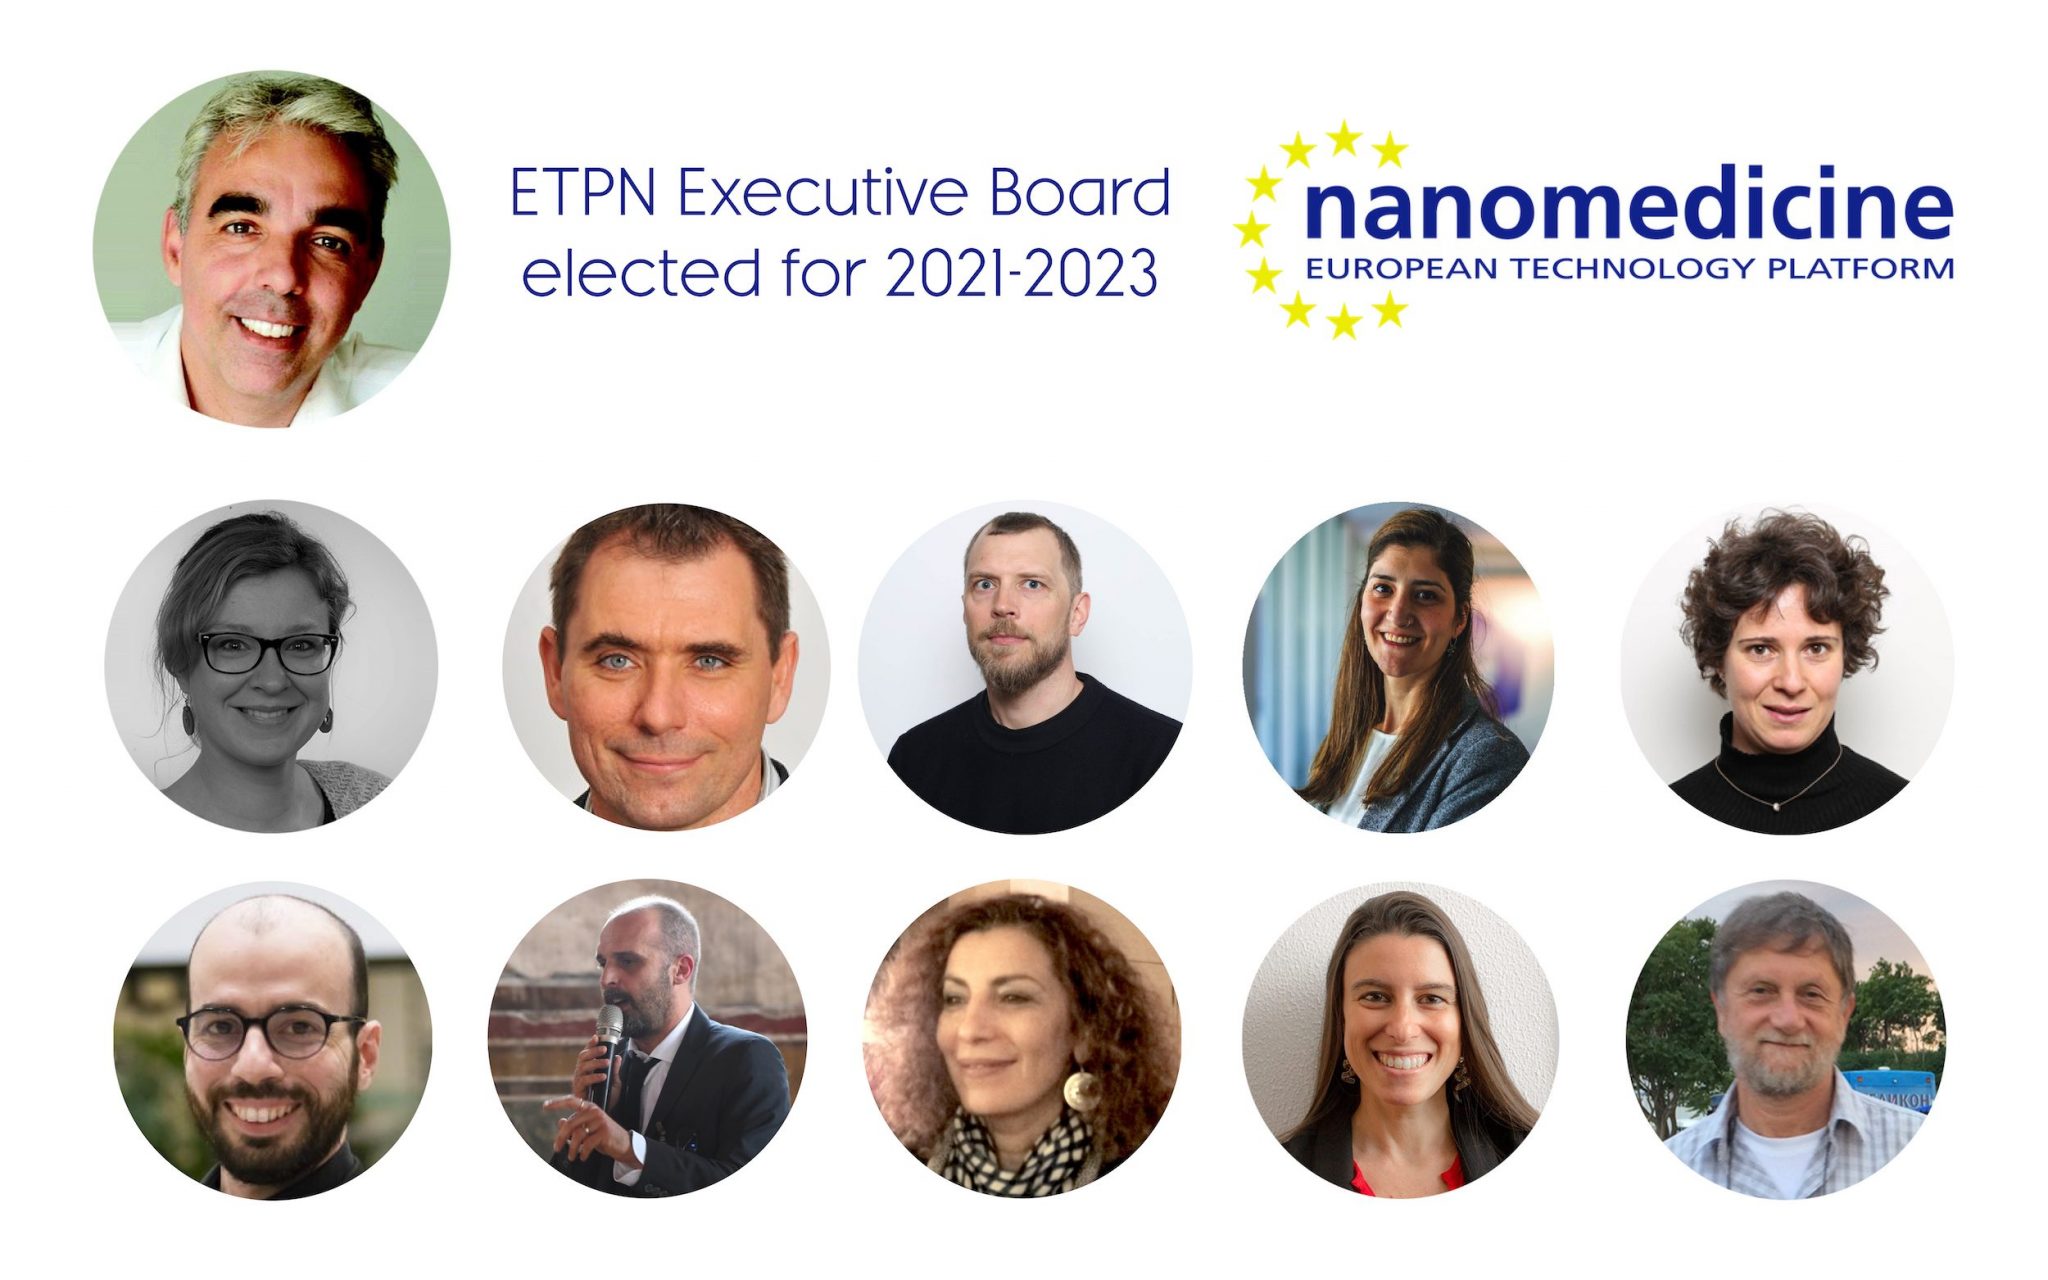 Raymond Schiffelers will lead the ETPN Executive Board in 2021-2023: meet the team!